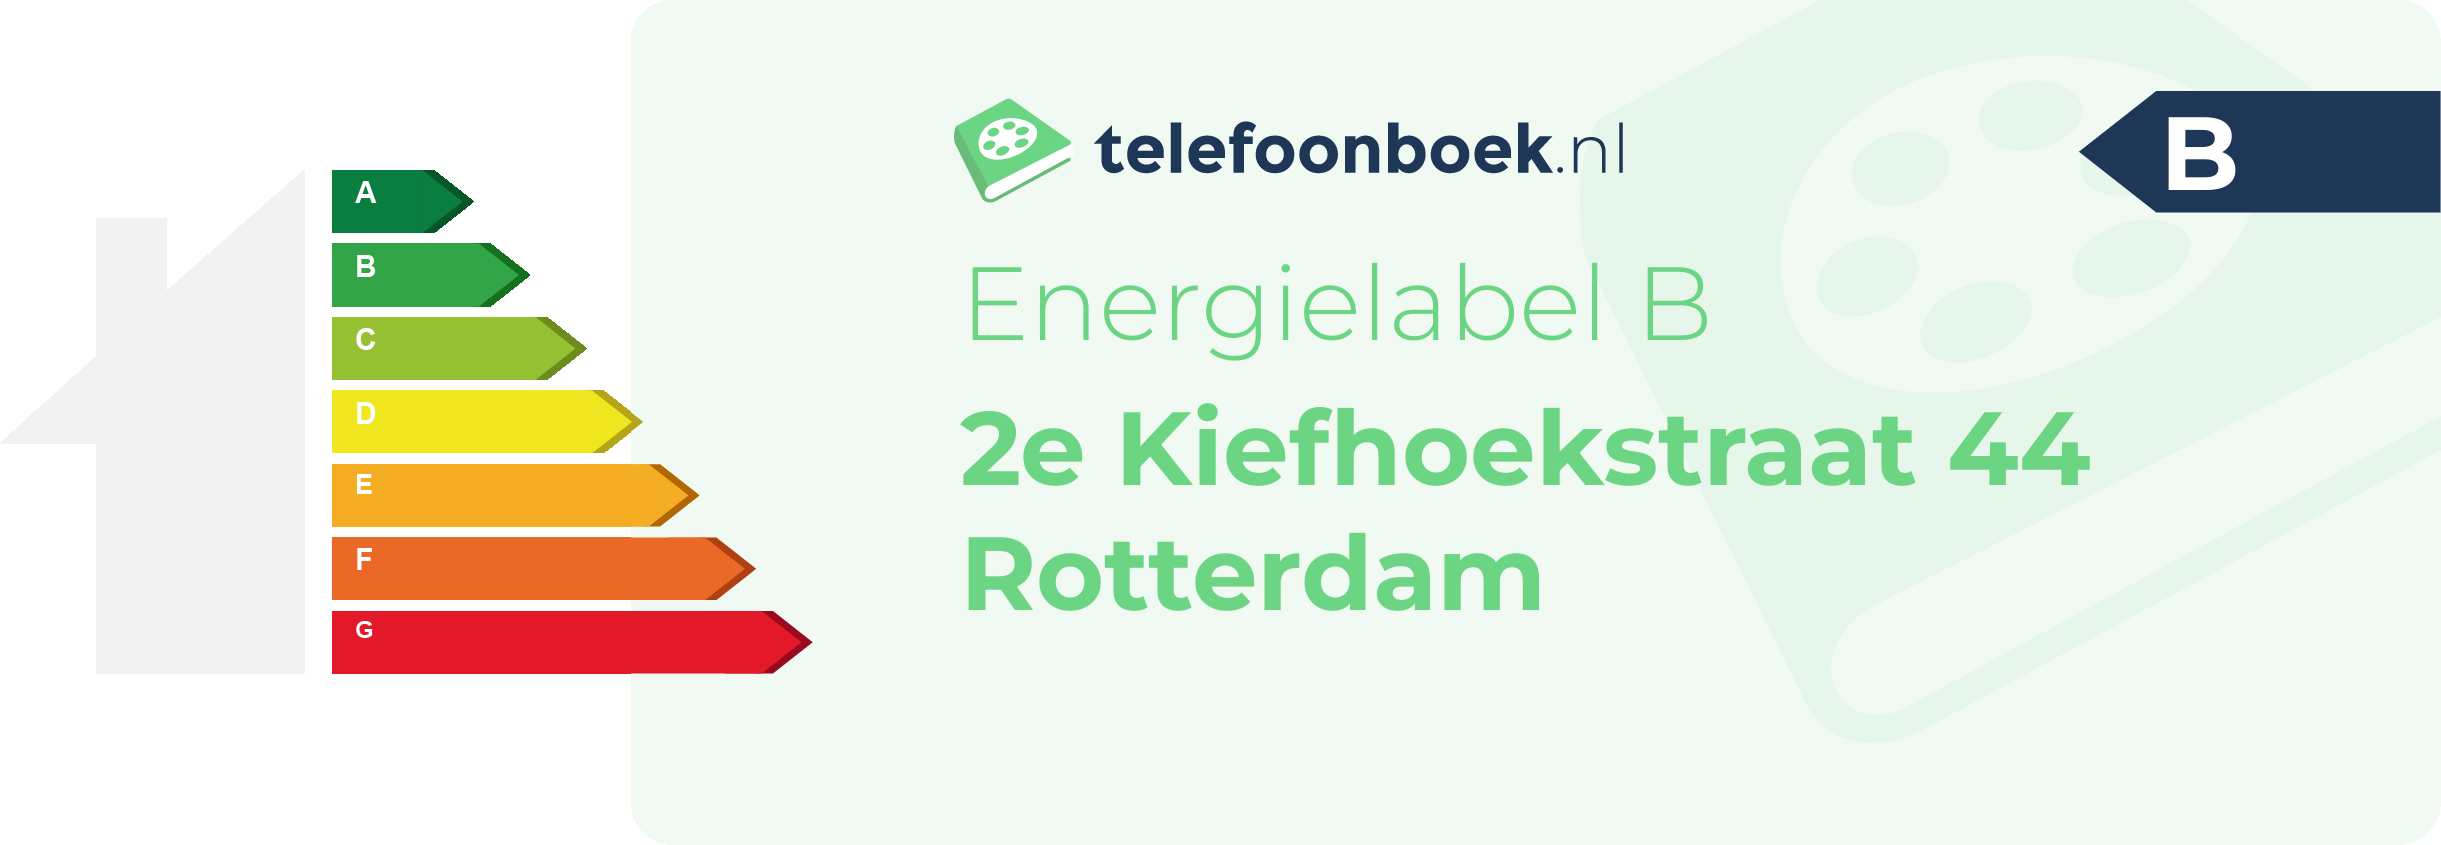 Energielabel 2e Kiefhoekstraat 44 Rotterdam